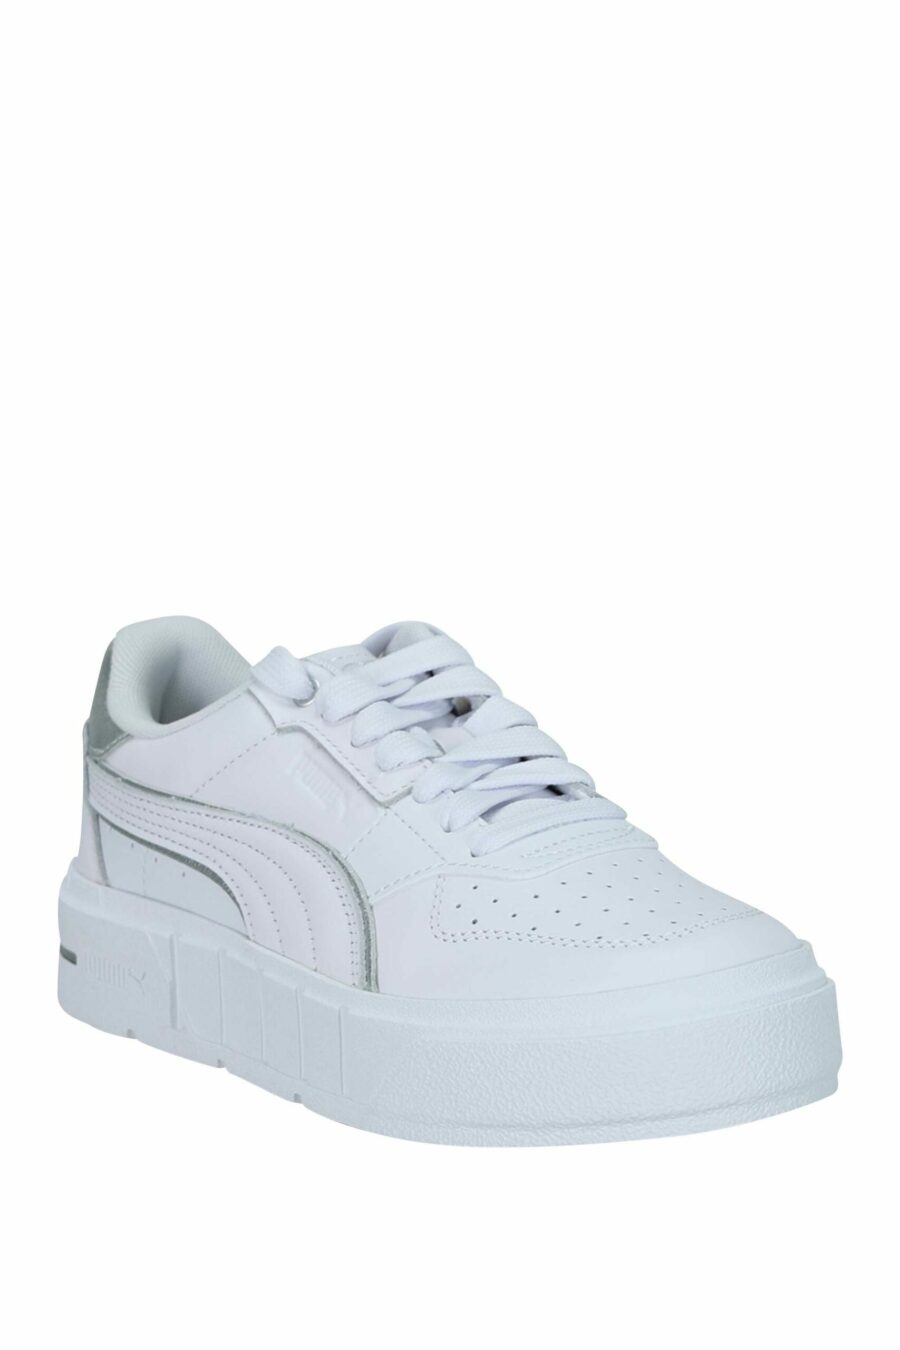 Zapatillas blancas con plateado "cali court" - 4065454895660 1 scaled